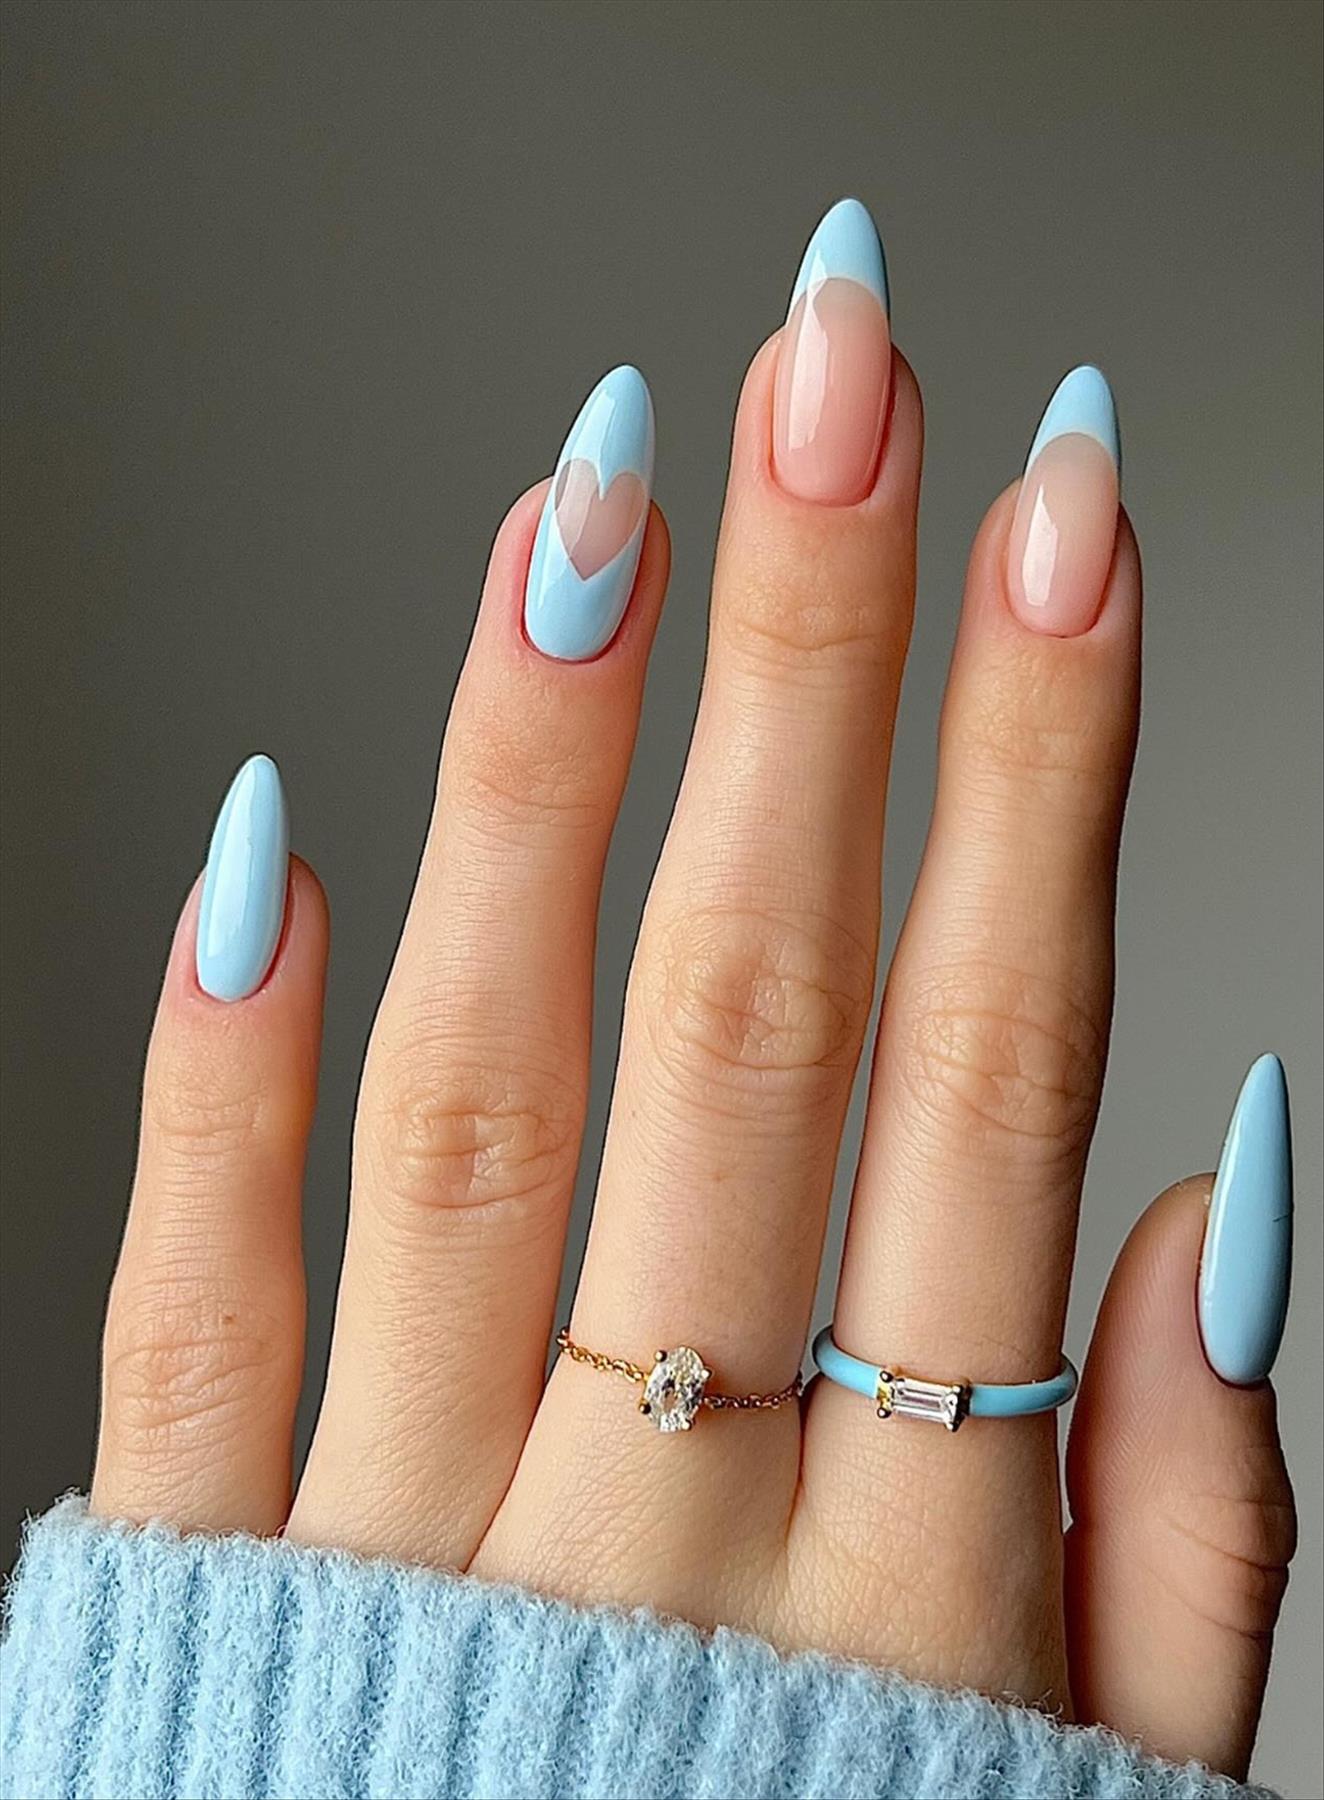 Beautiful blue nail designs art you'll love